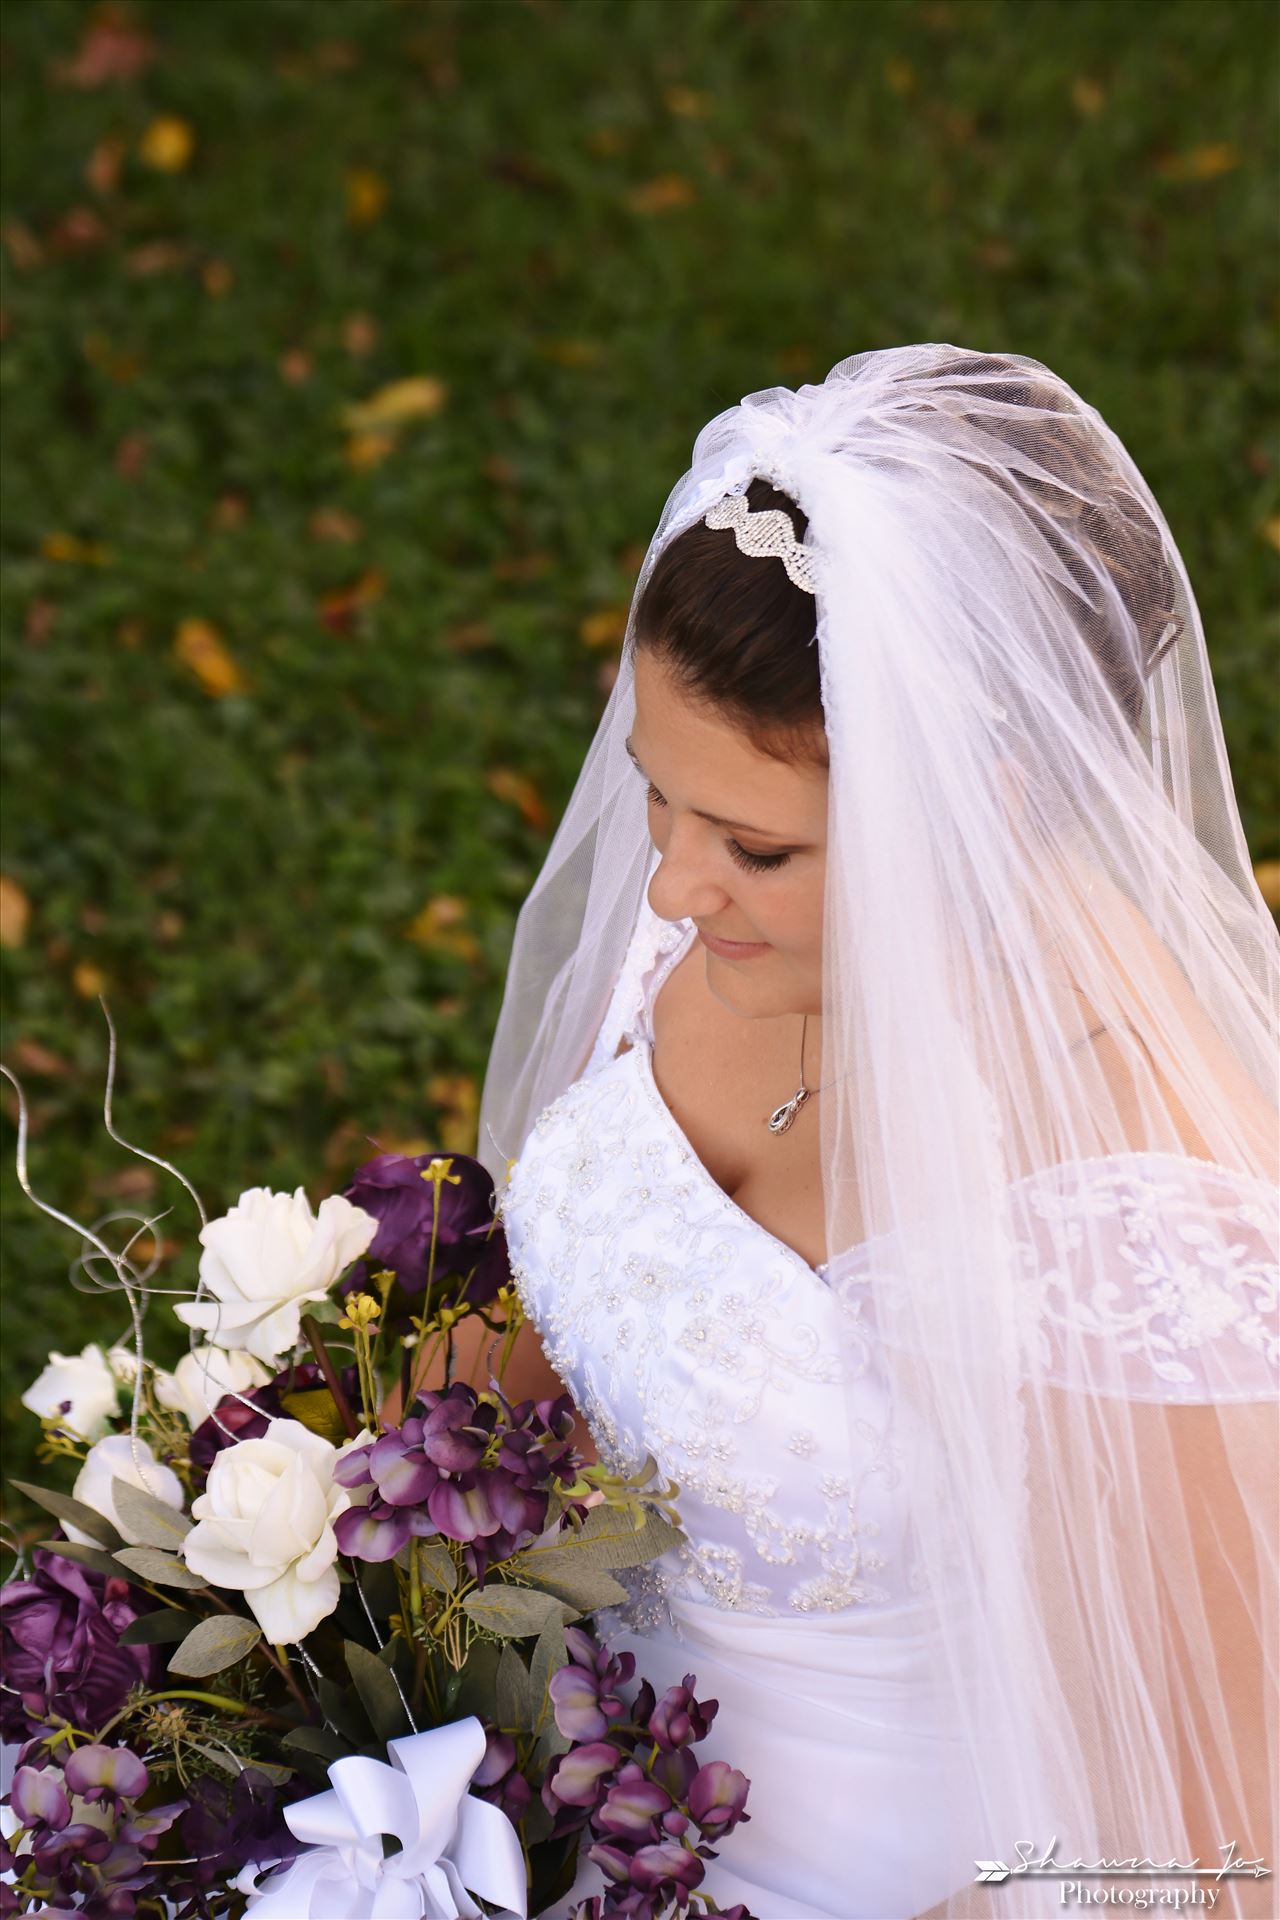 EdwardsWedding1.jpg - Alena made one stunning bride by Shawna Jo Photography